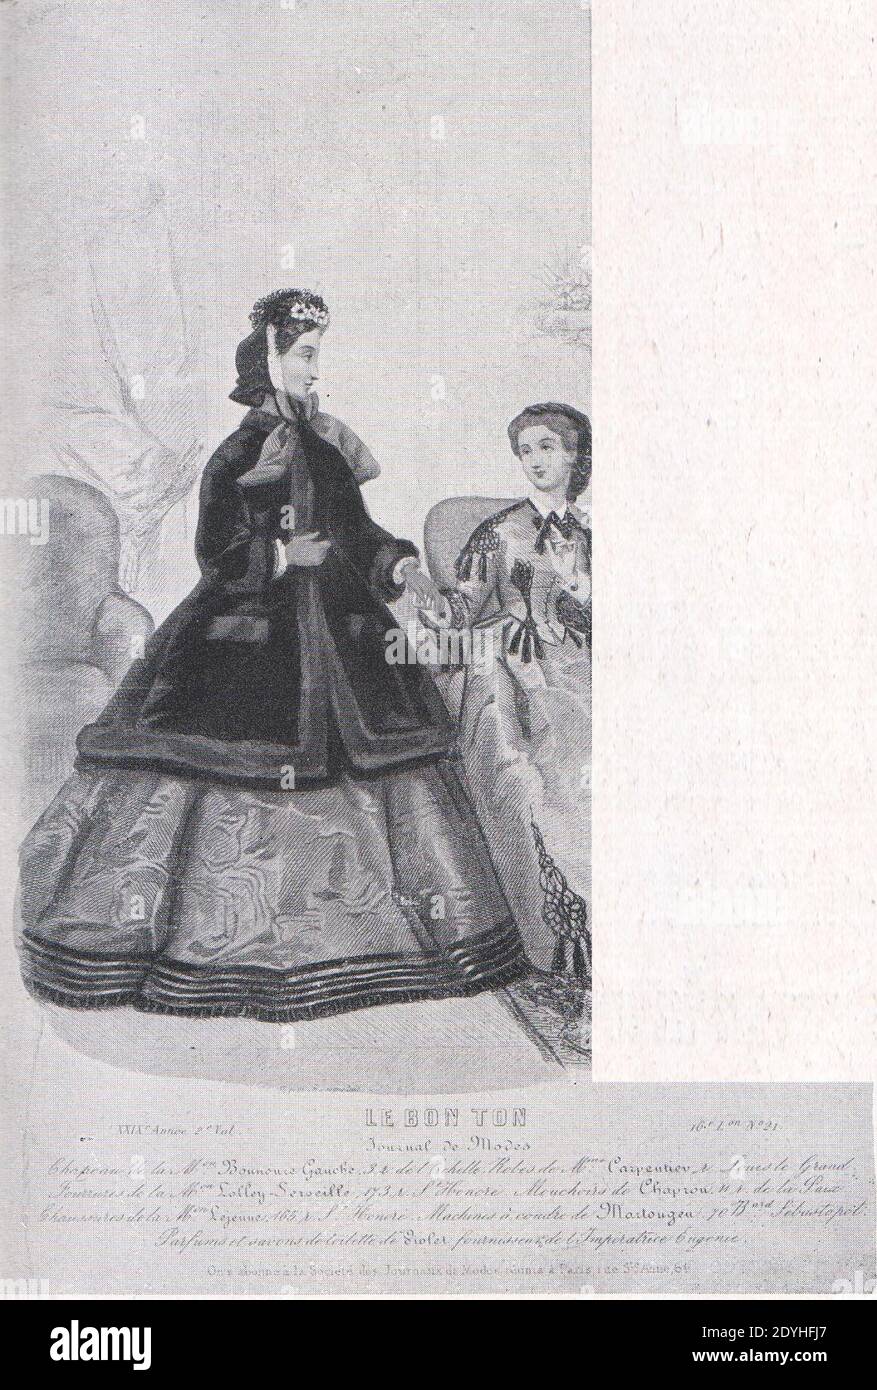 Le bon ton, Journal de Modes, 1829. Stock Photo